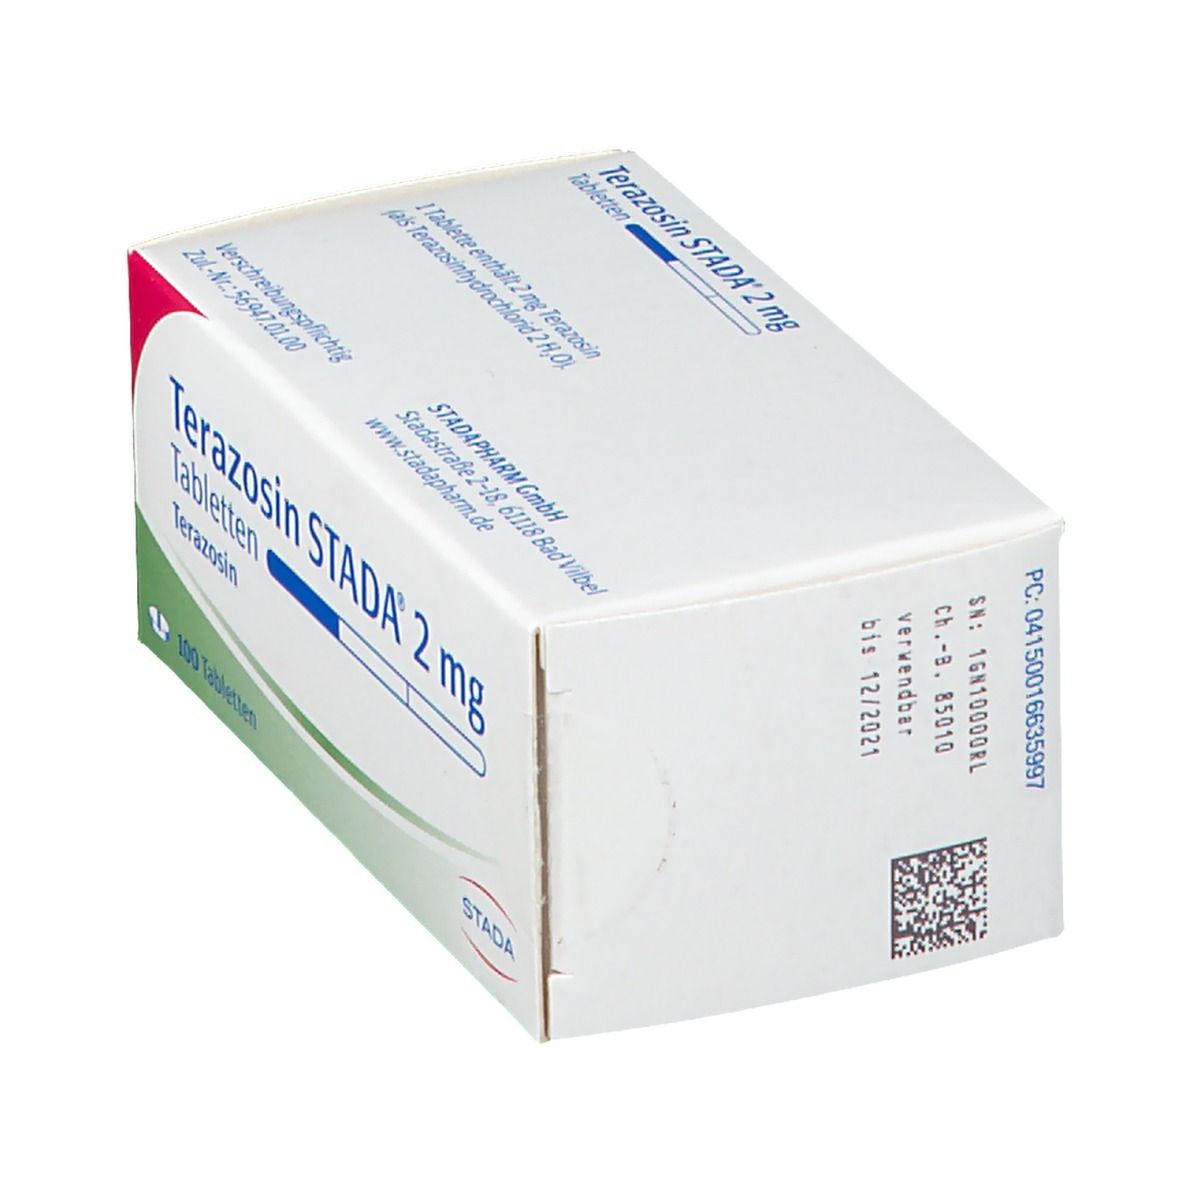 Terazosin STADA® 2 mg